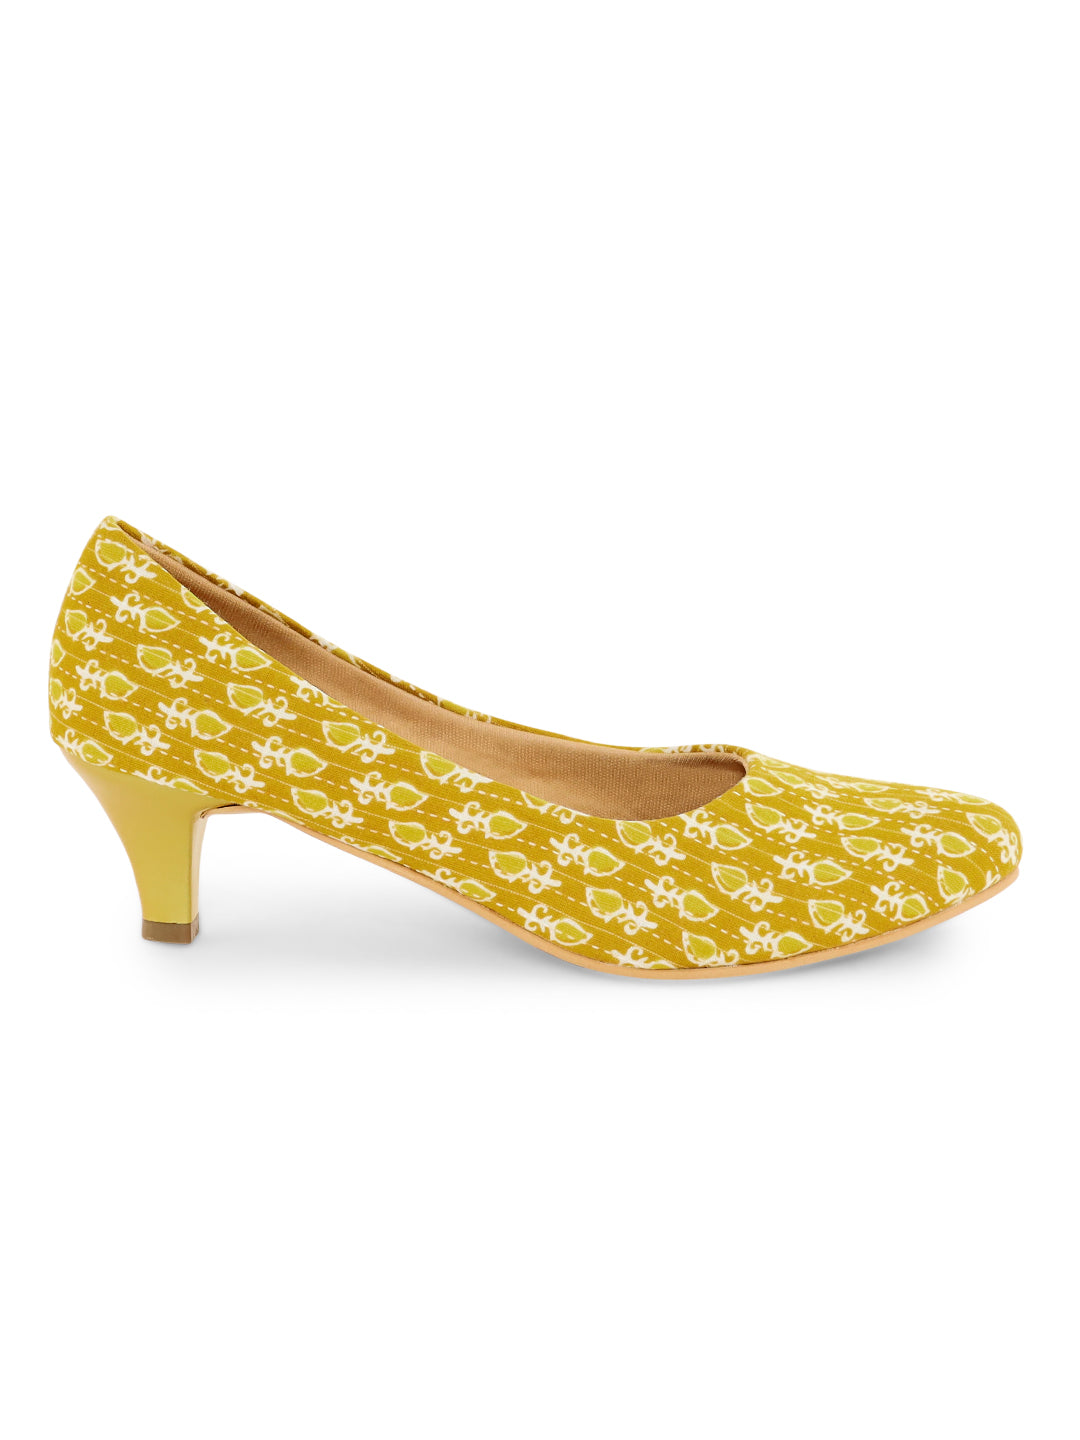 Mules - Light yellow - Ladies | H&M